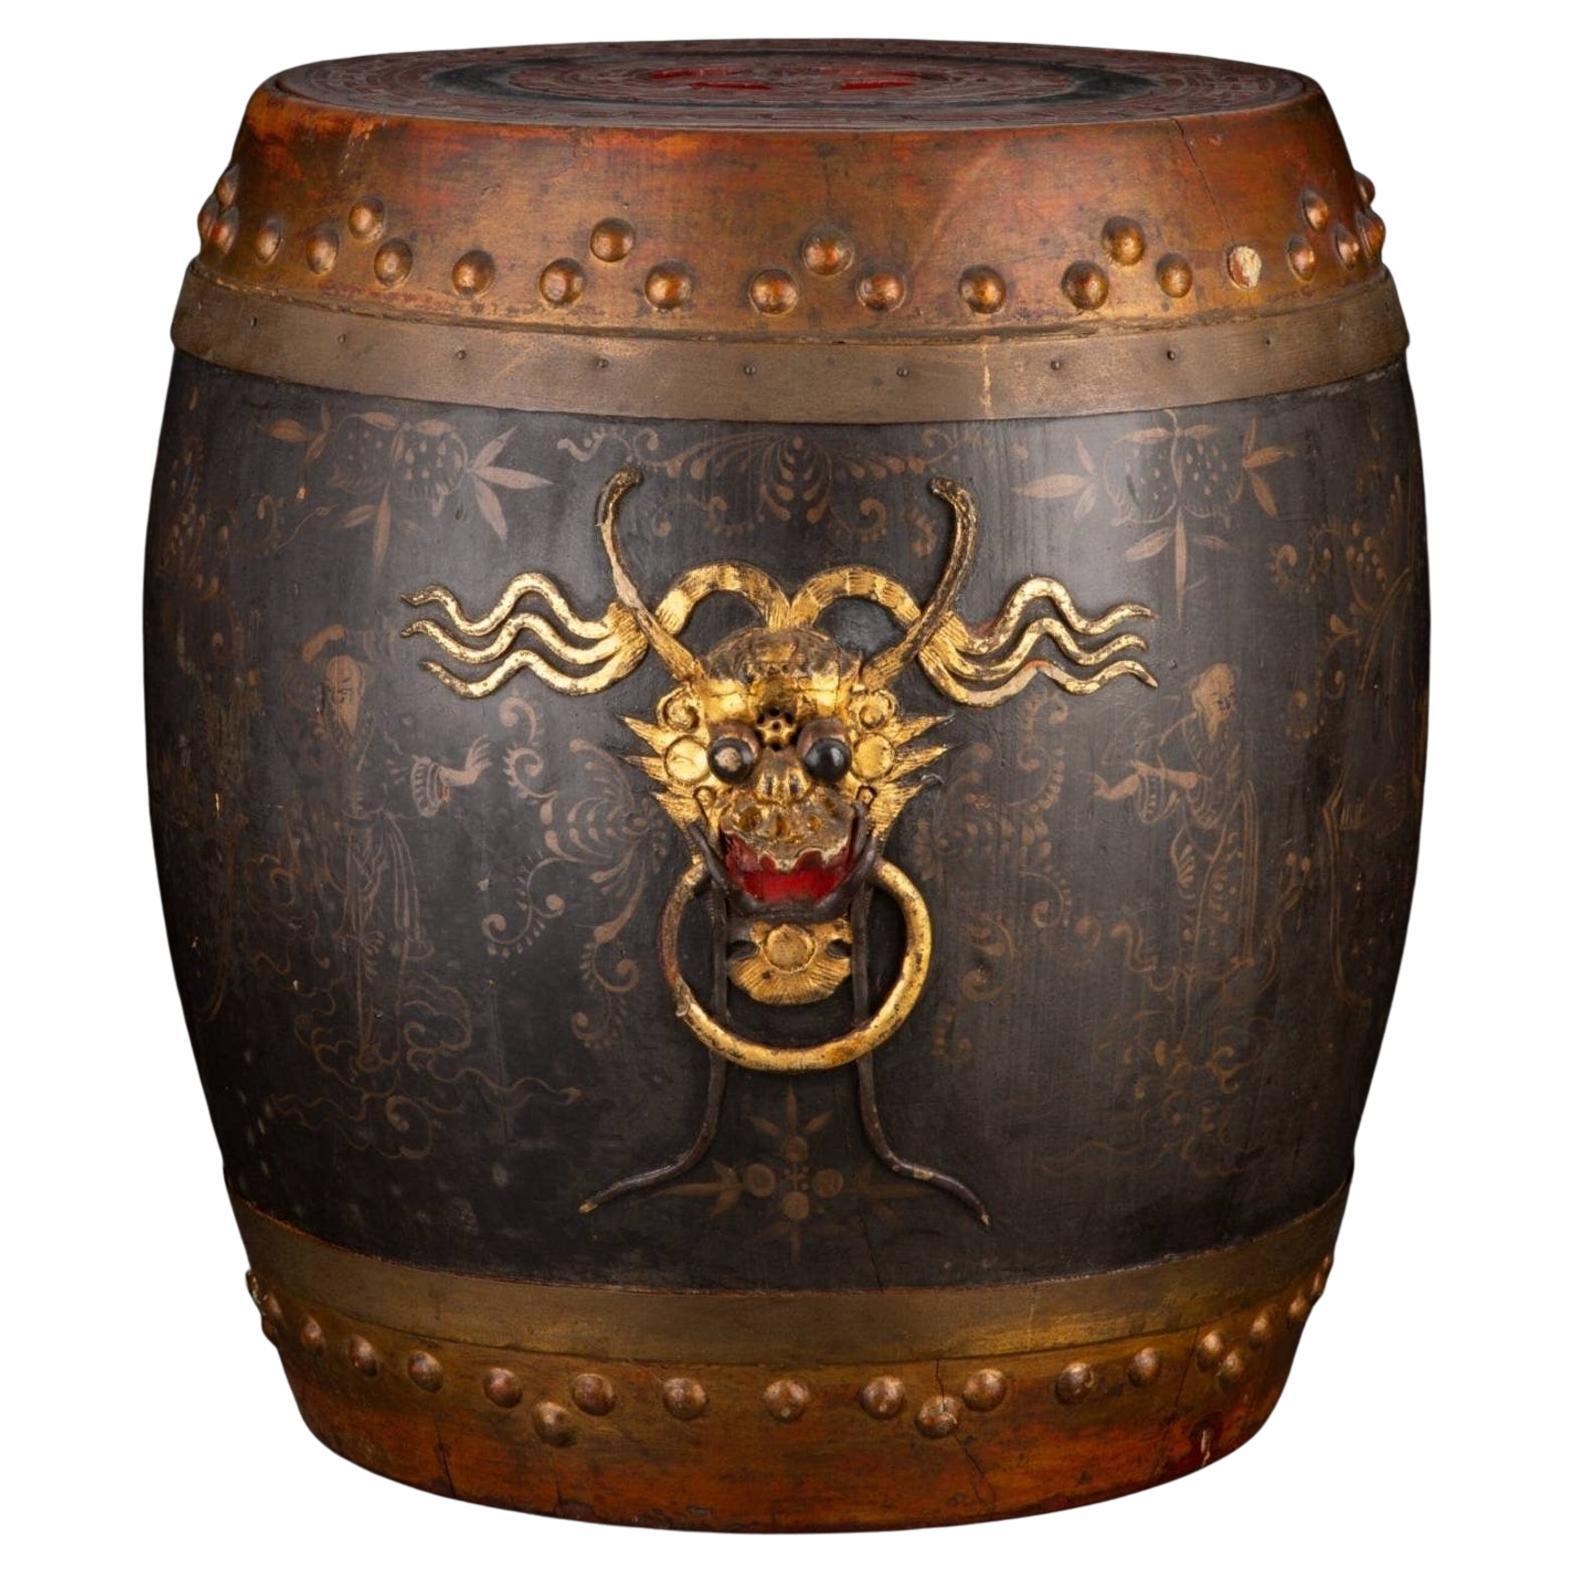 Antique Southeast Asian Dragon Rice Barrel Drum Table